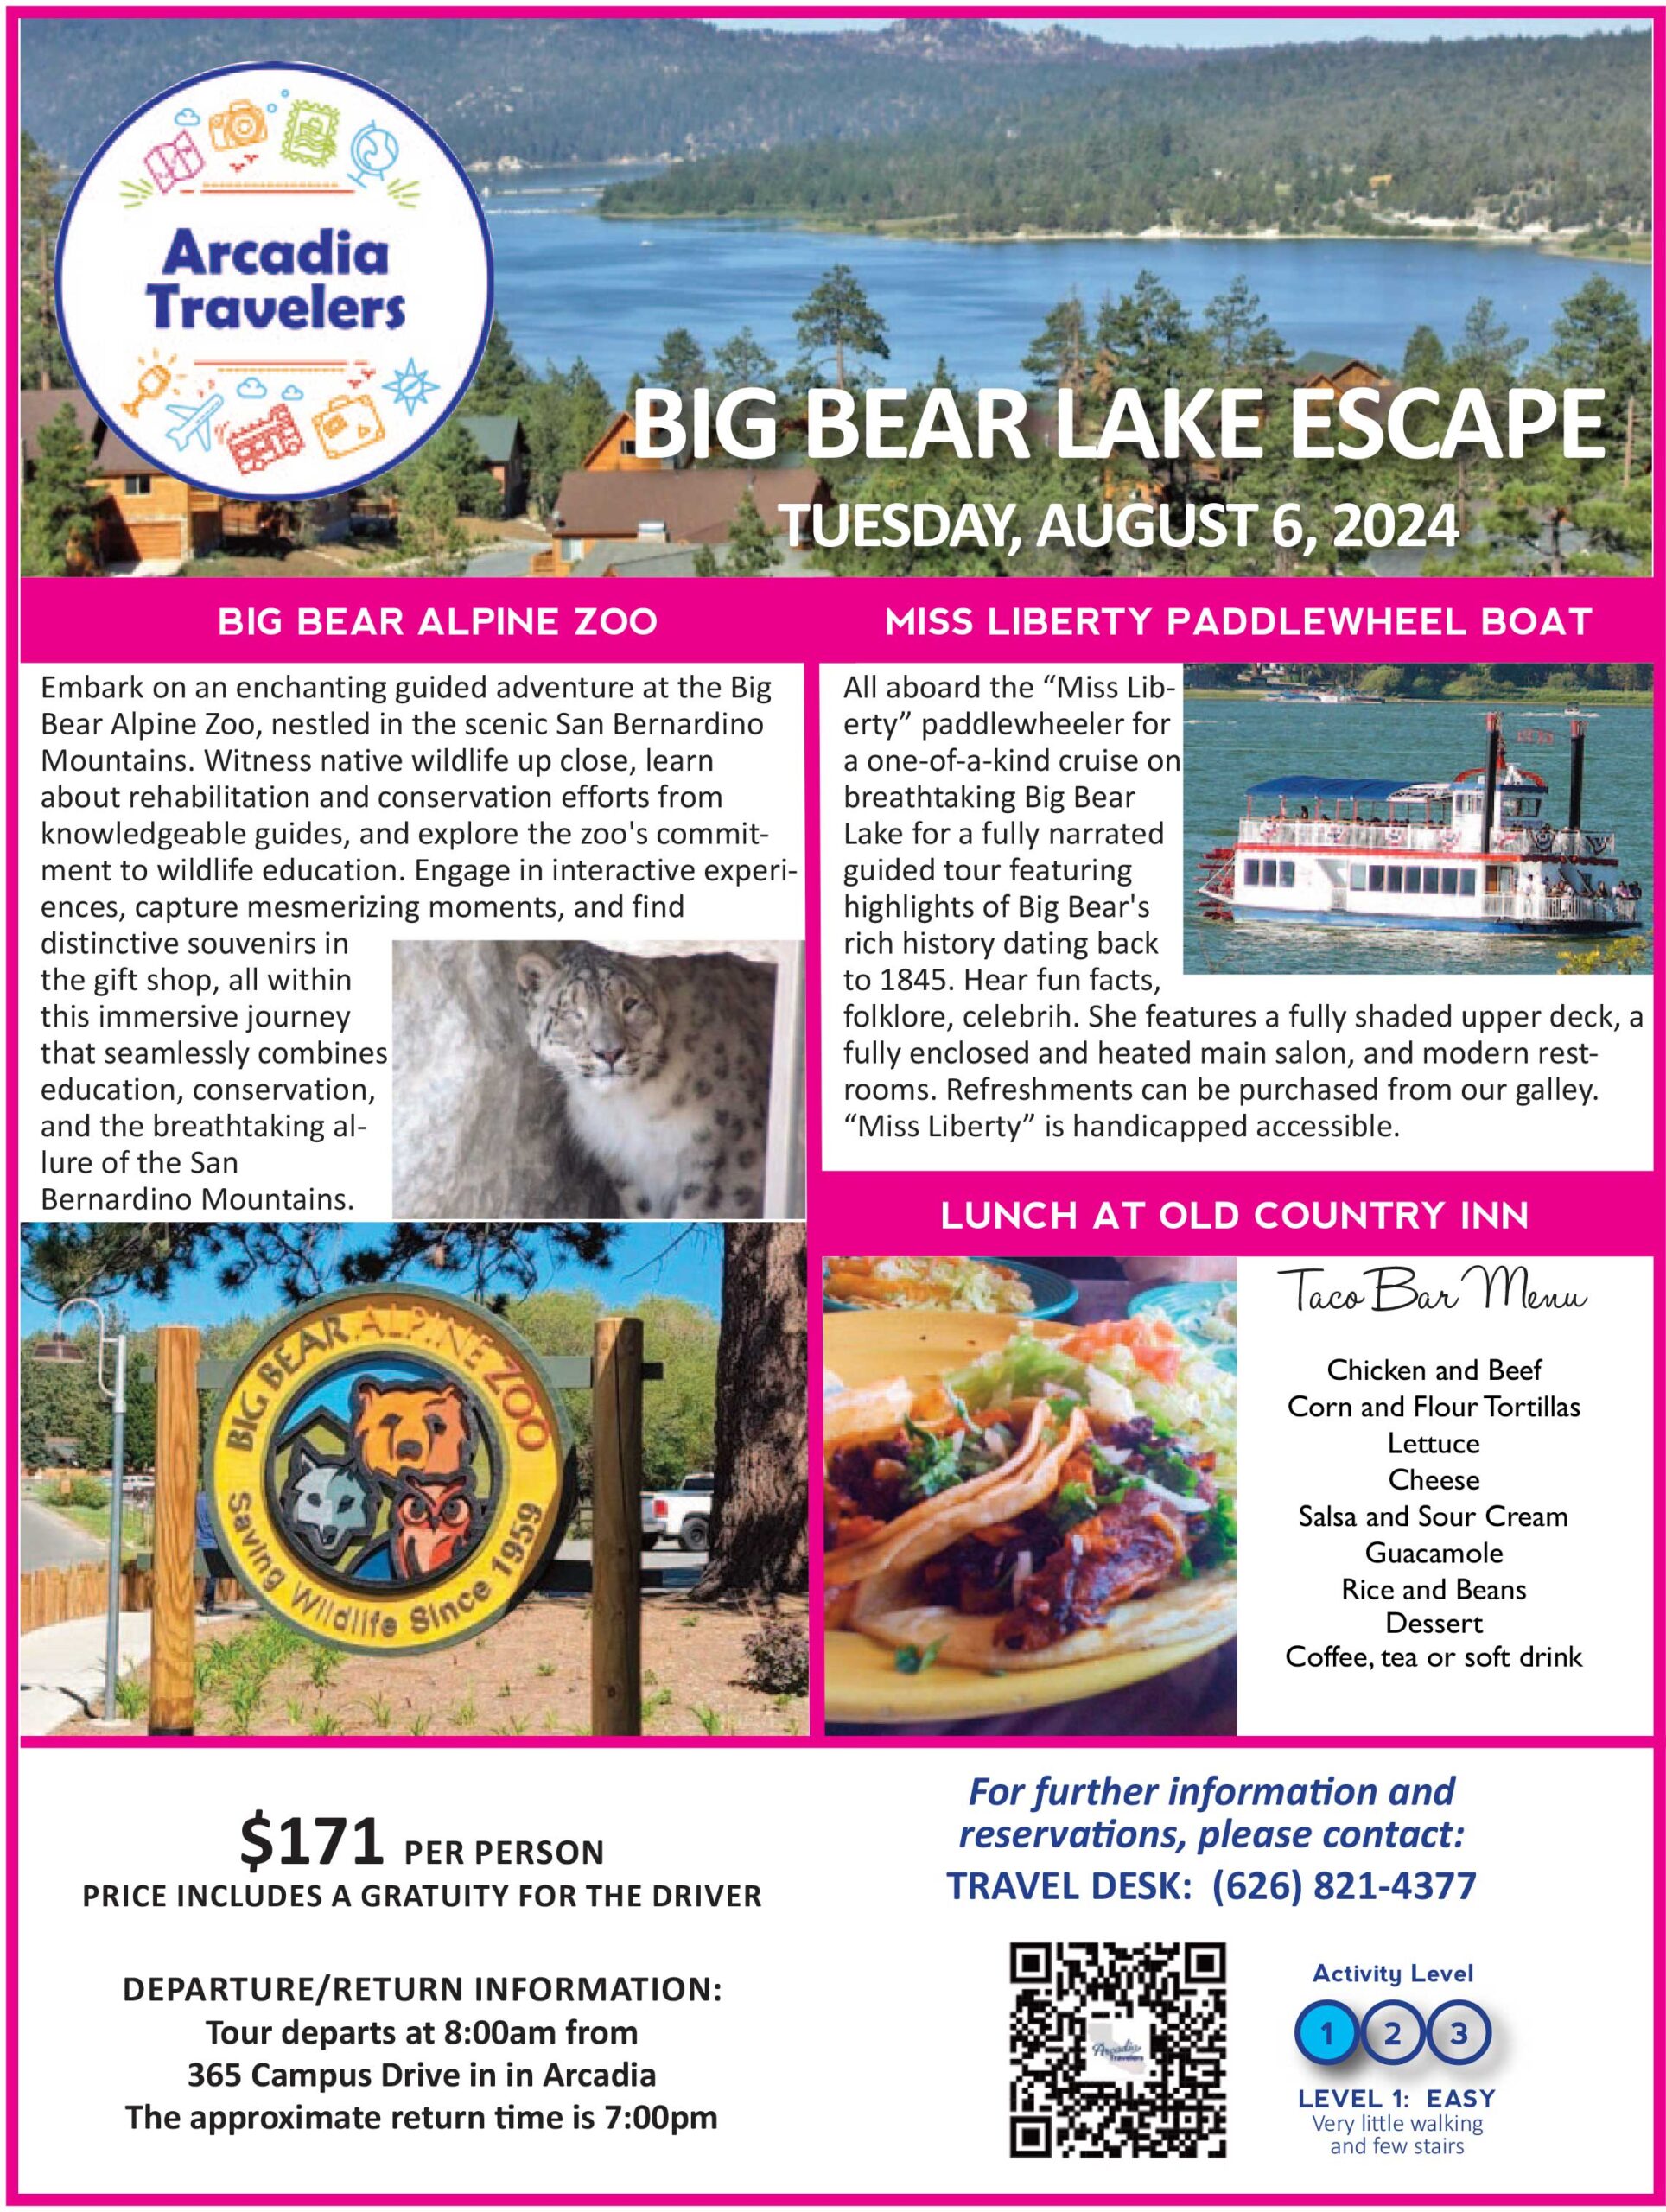 Arcadia Travelers tour of Big Bear Lake on August 6, 2024